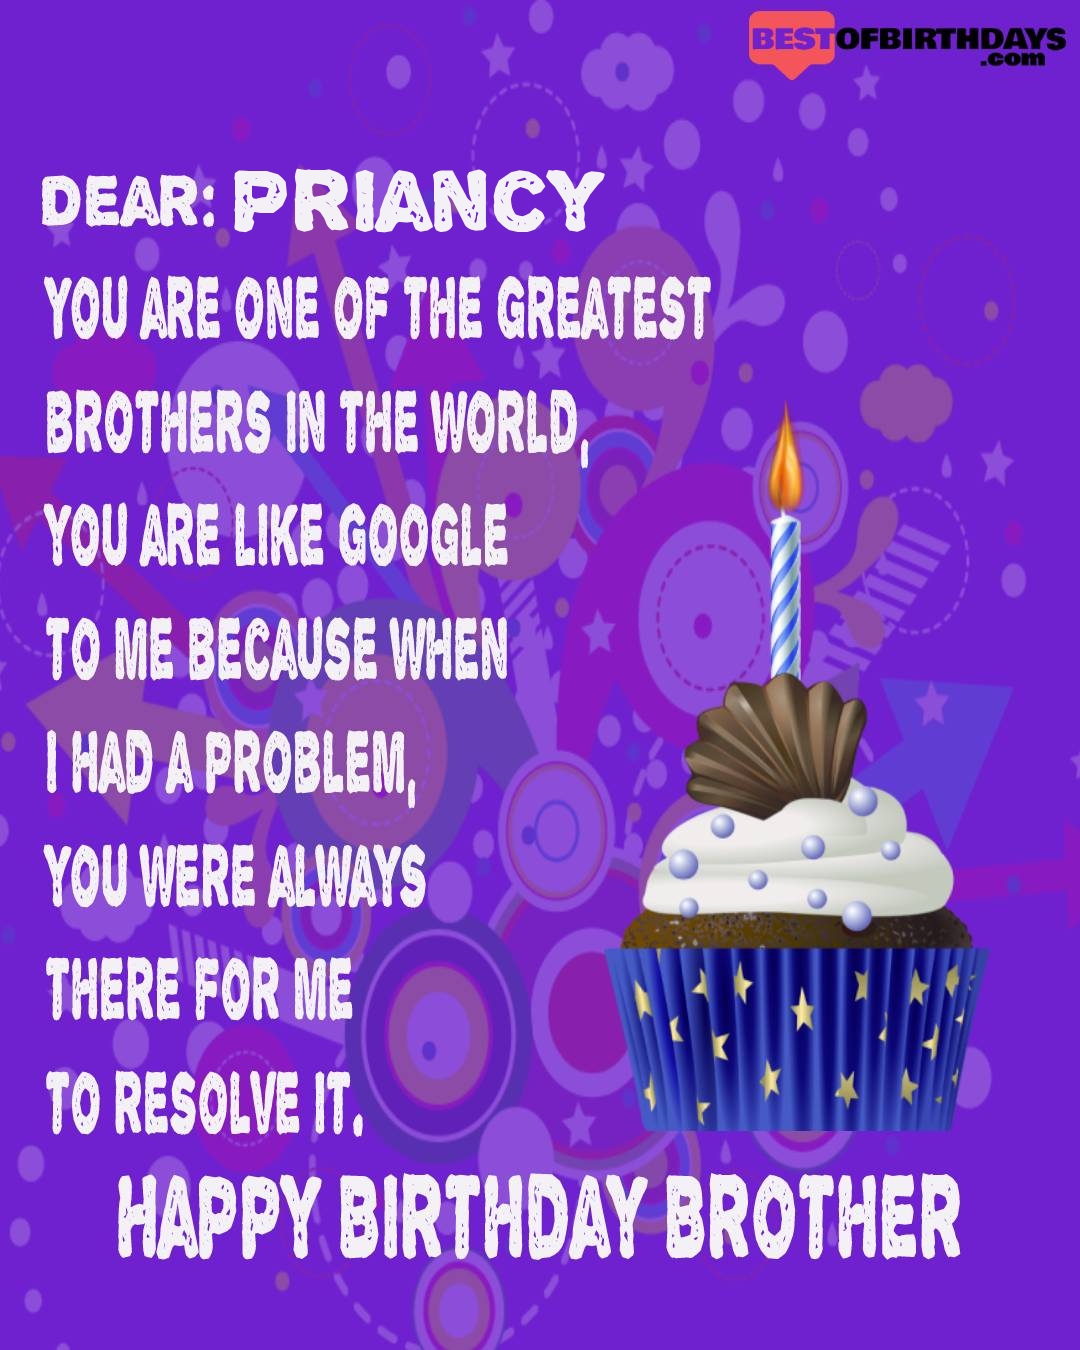 Happy birthday priancy bhai brother bro